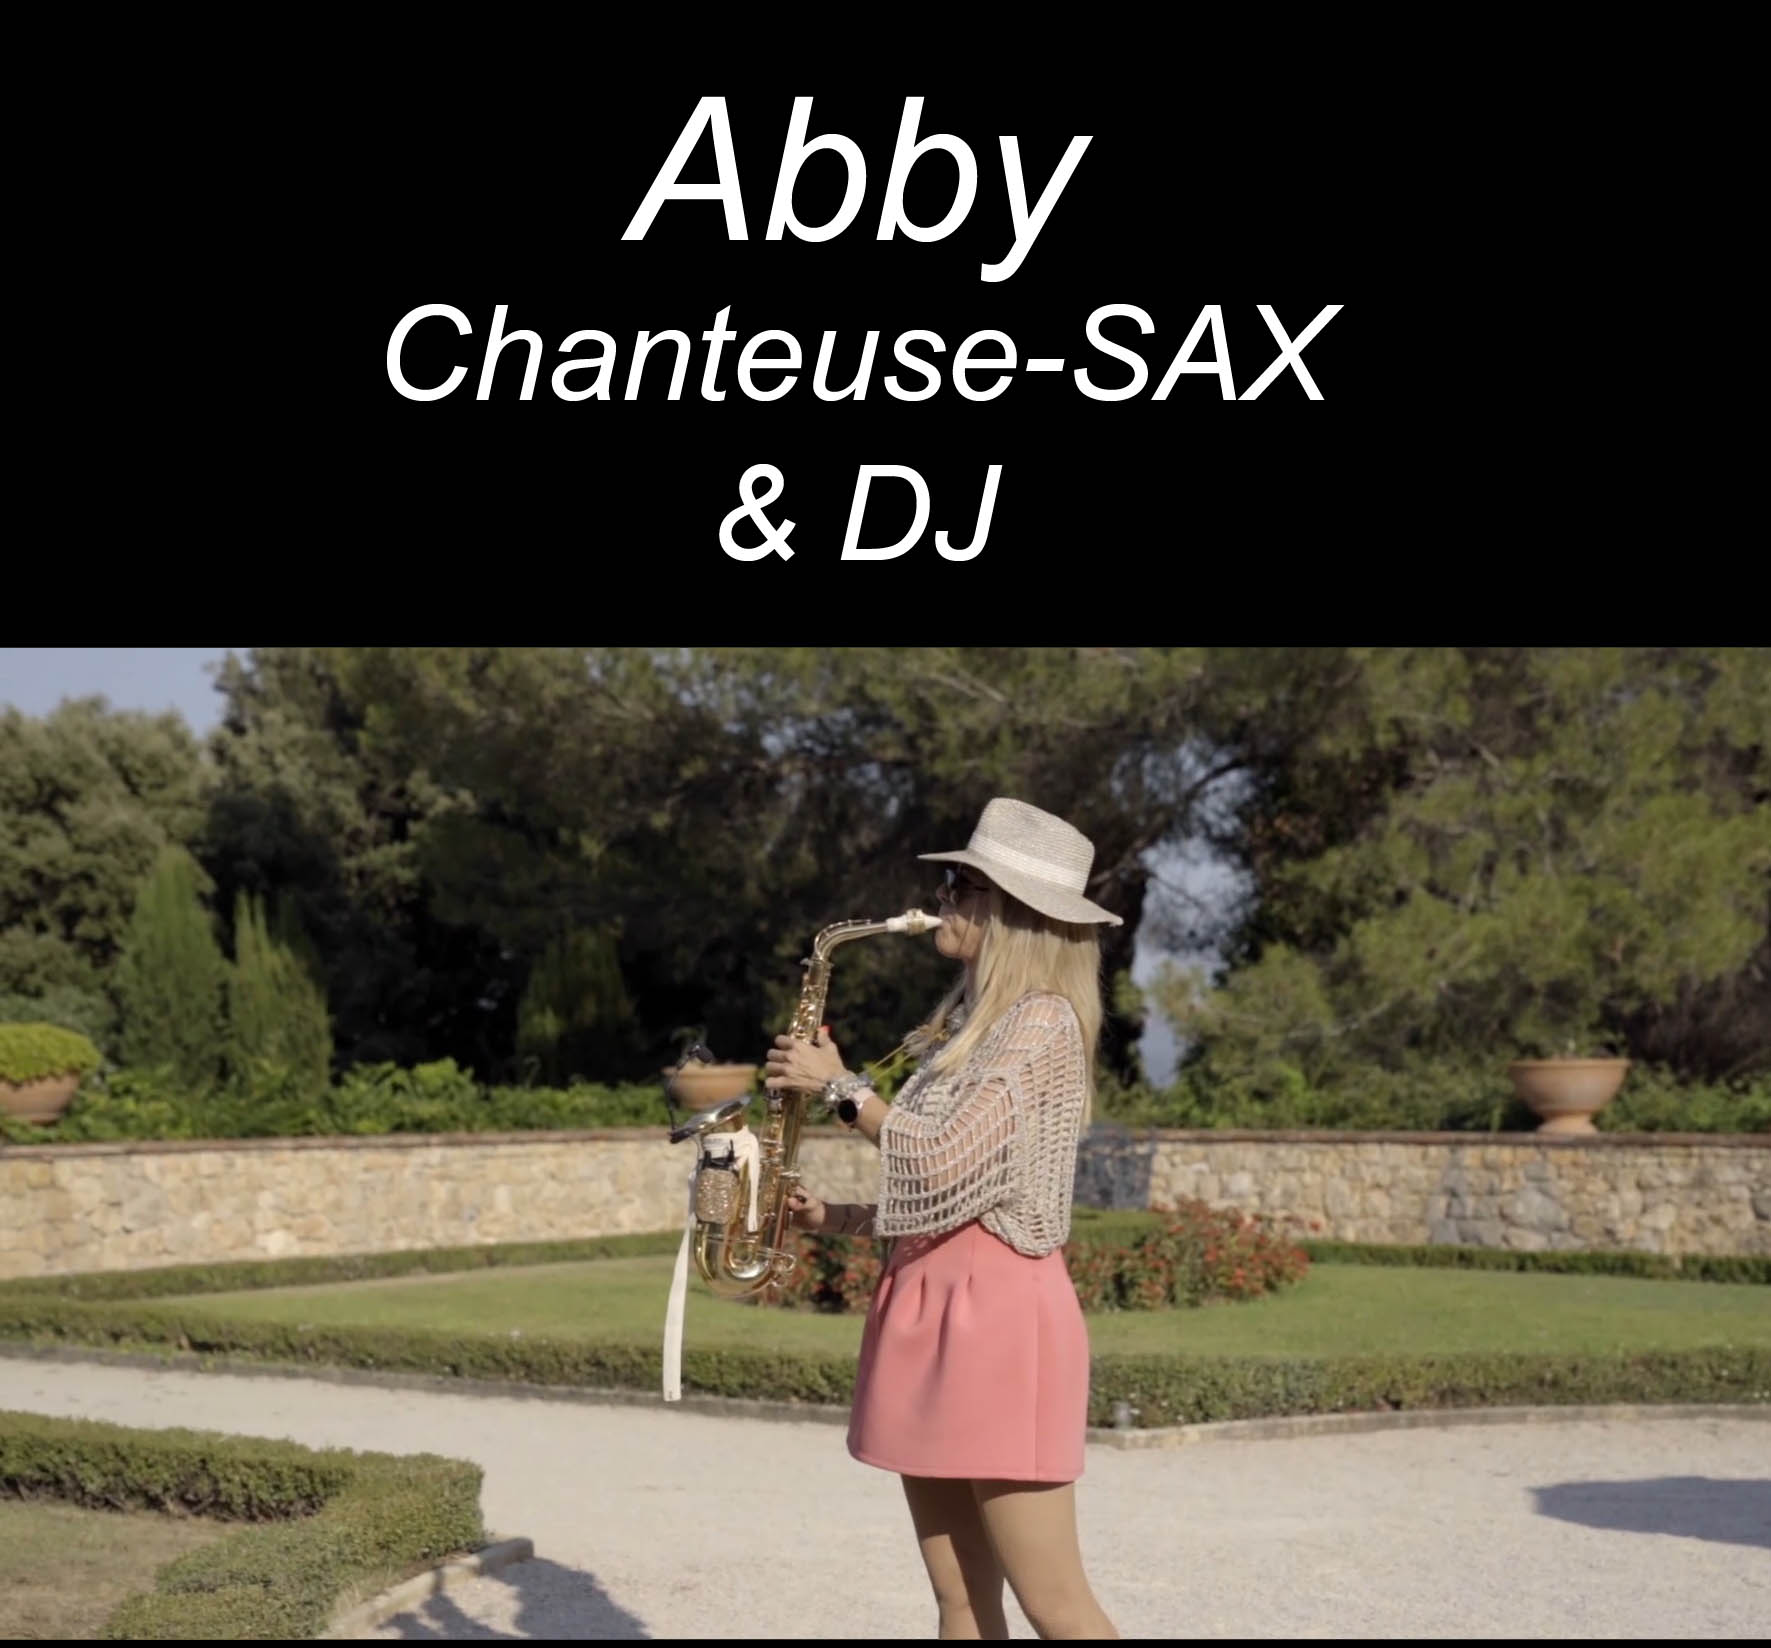 Abby, chanteuse saxophoniste